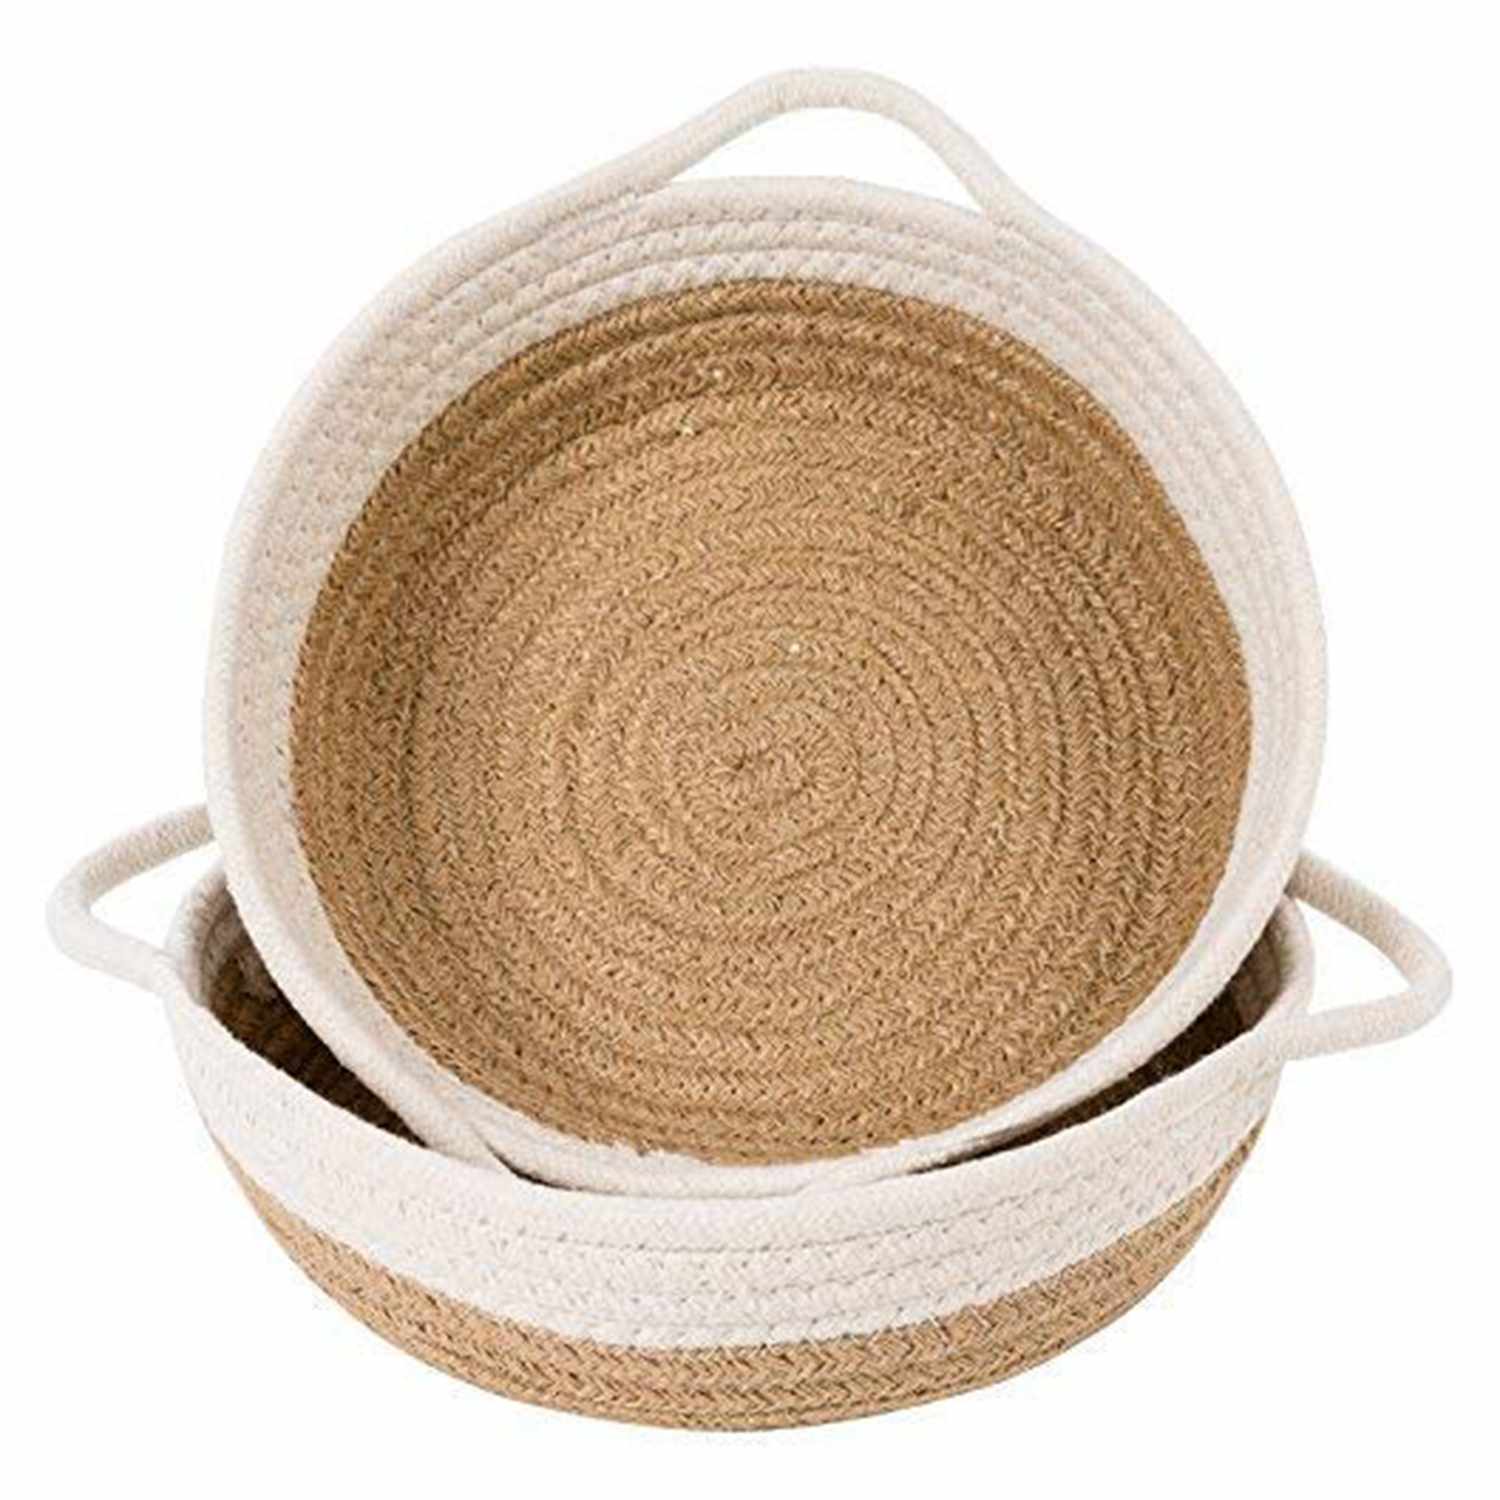 Goodpick 2pack Cotton Rope Basket Woven Storage Basket